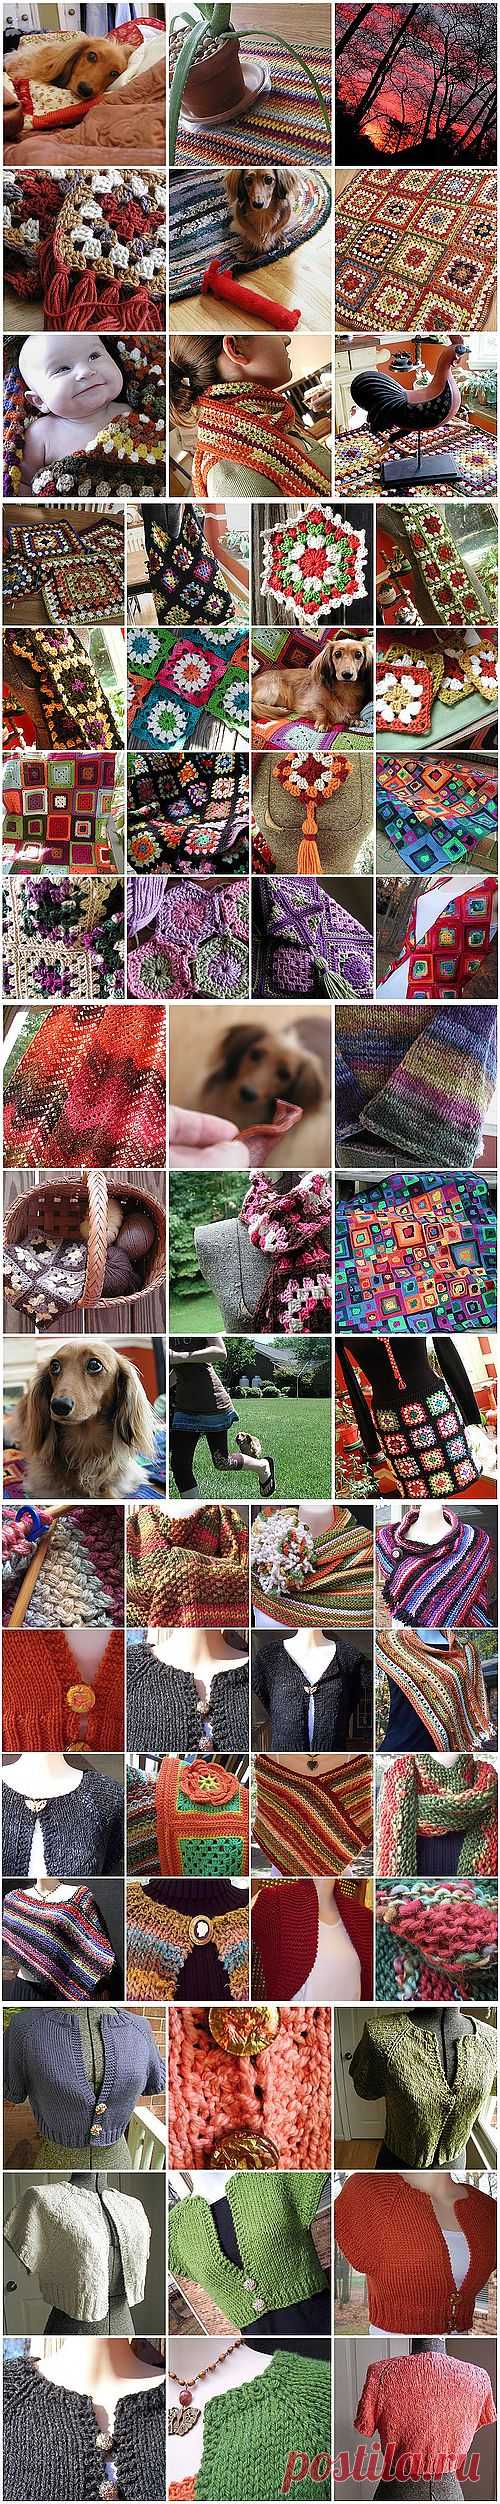 Fiddlesticks - My crochet and knitting ramblings.: Gallery